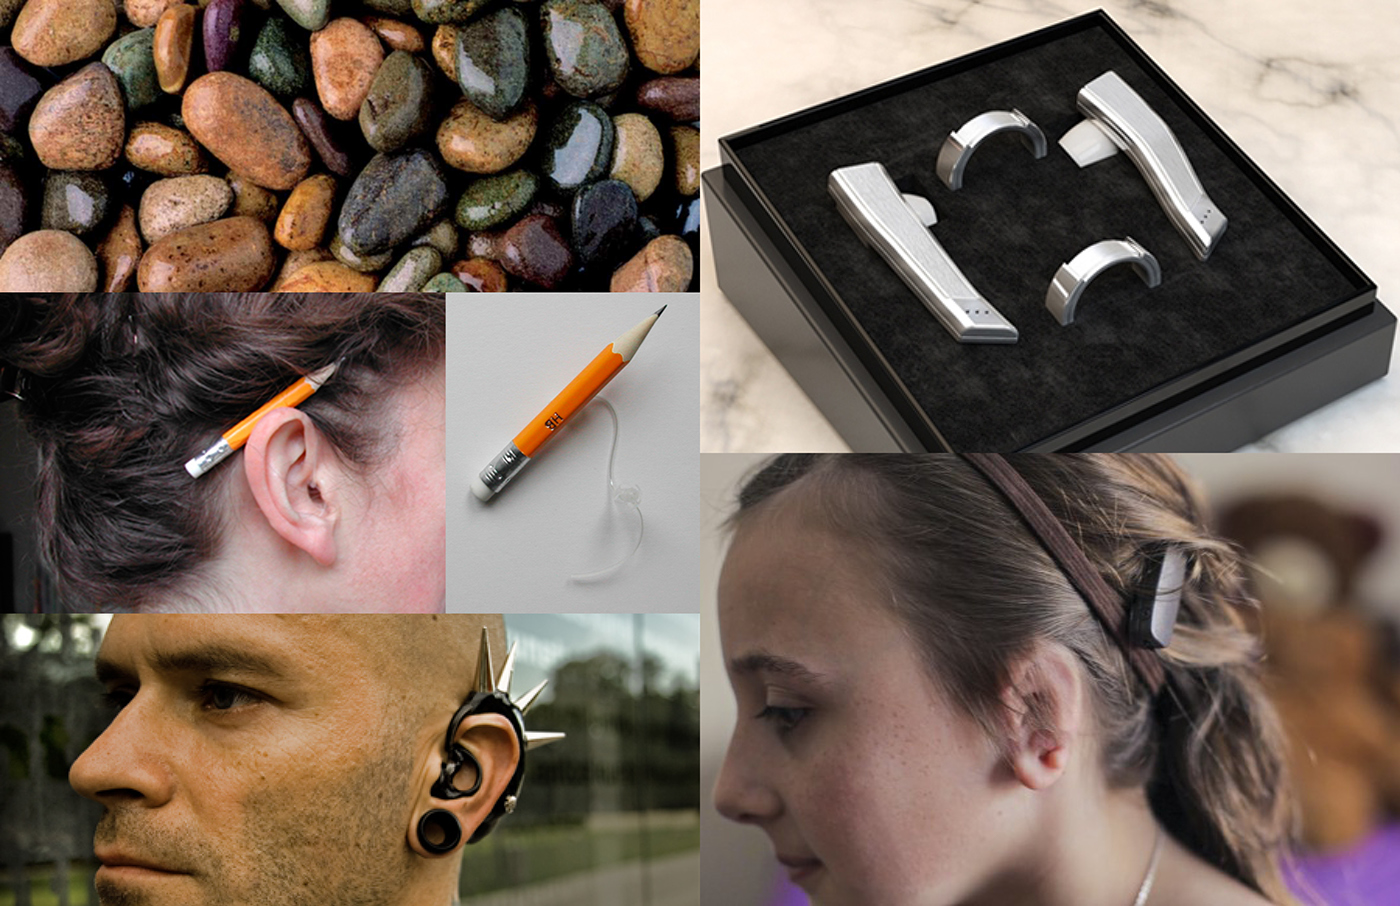 medical design hearing aid Health research pratt Pratt Institute pebble innovation medical